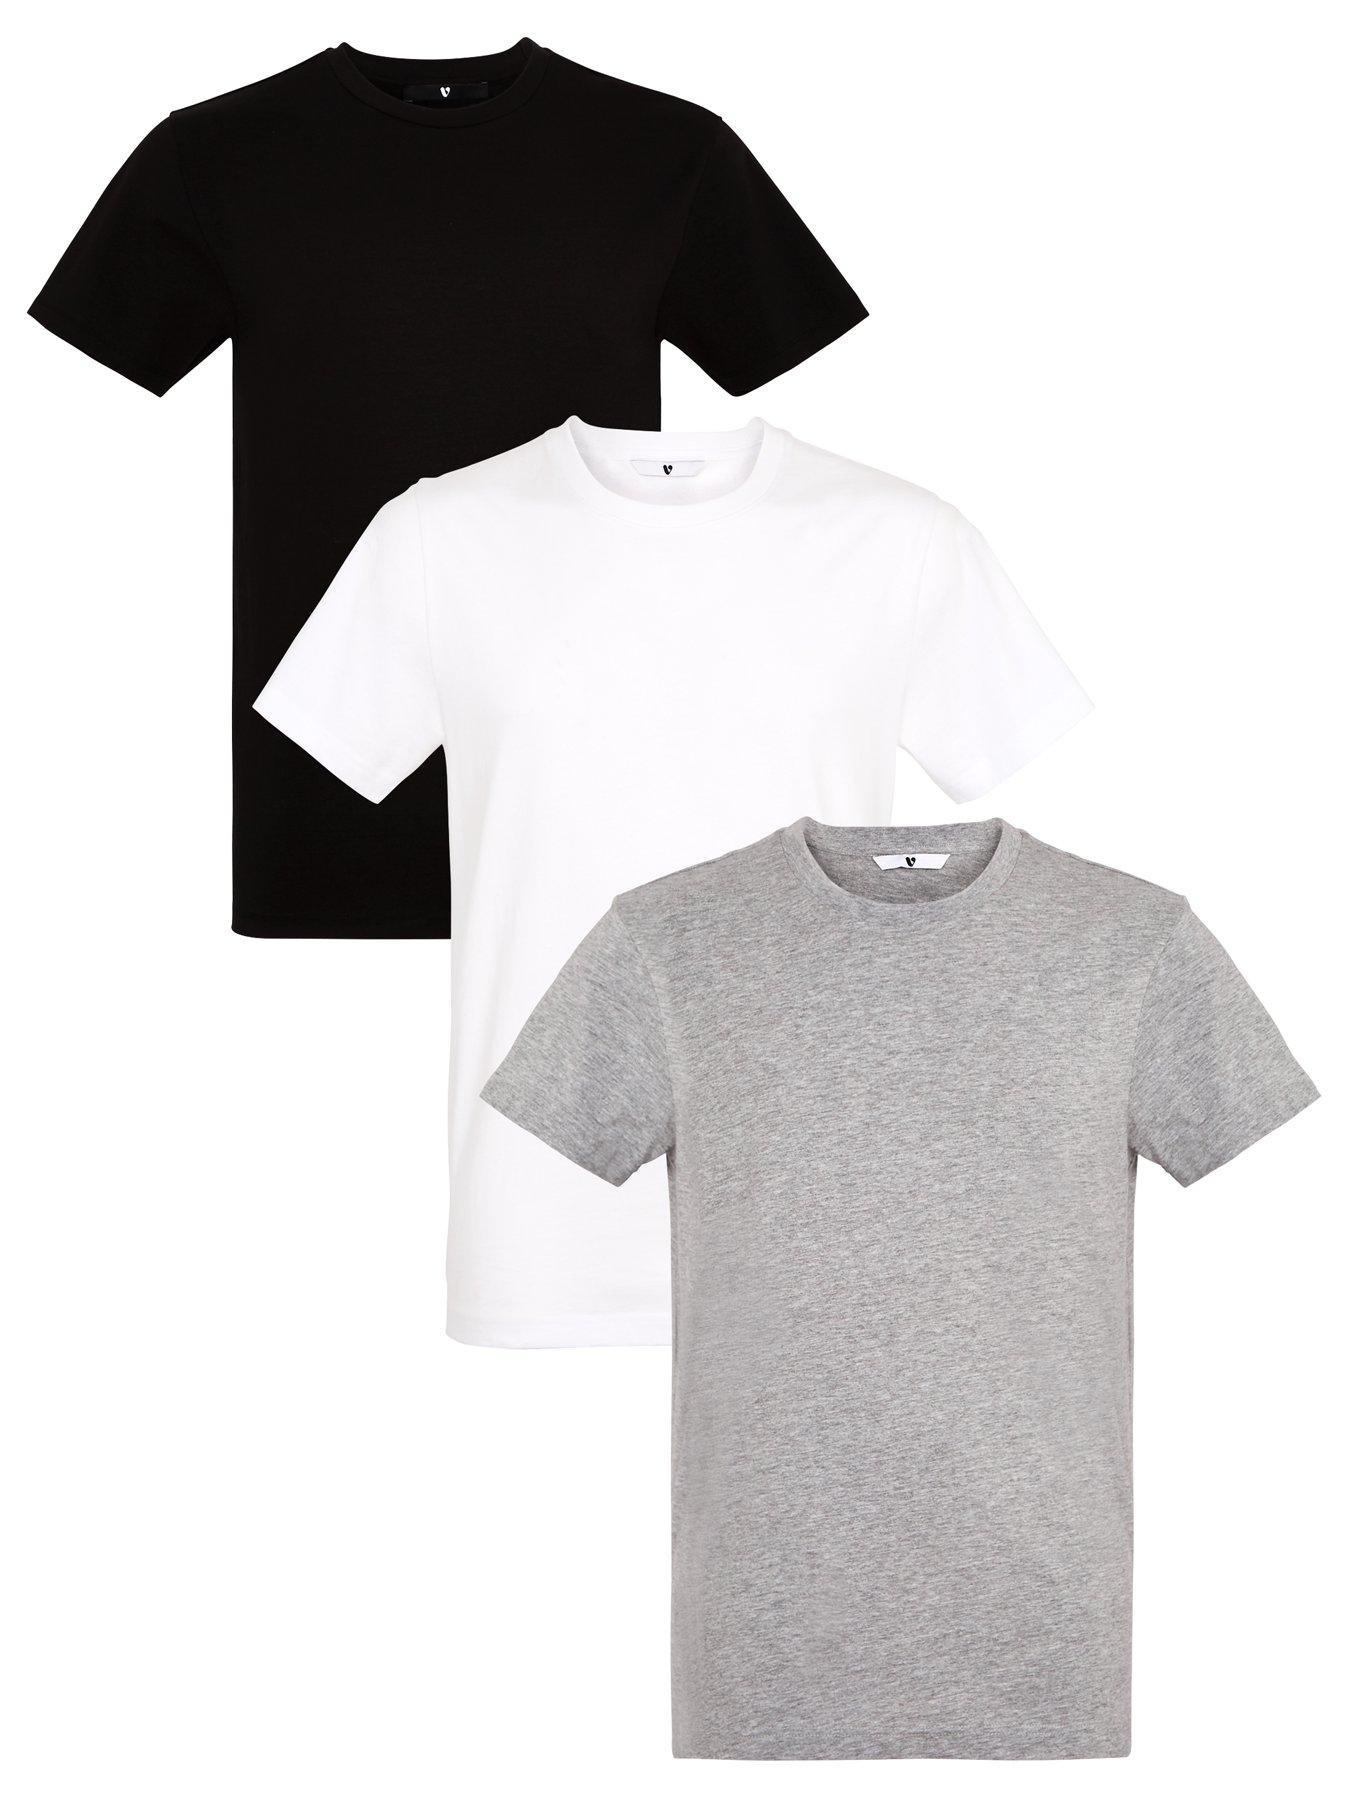 discount 57% First T-shirt MEN FASHION Shirts & T-shirts Sports Black S 